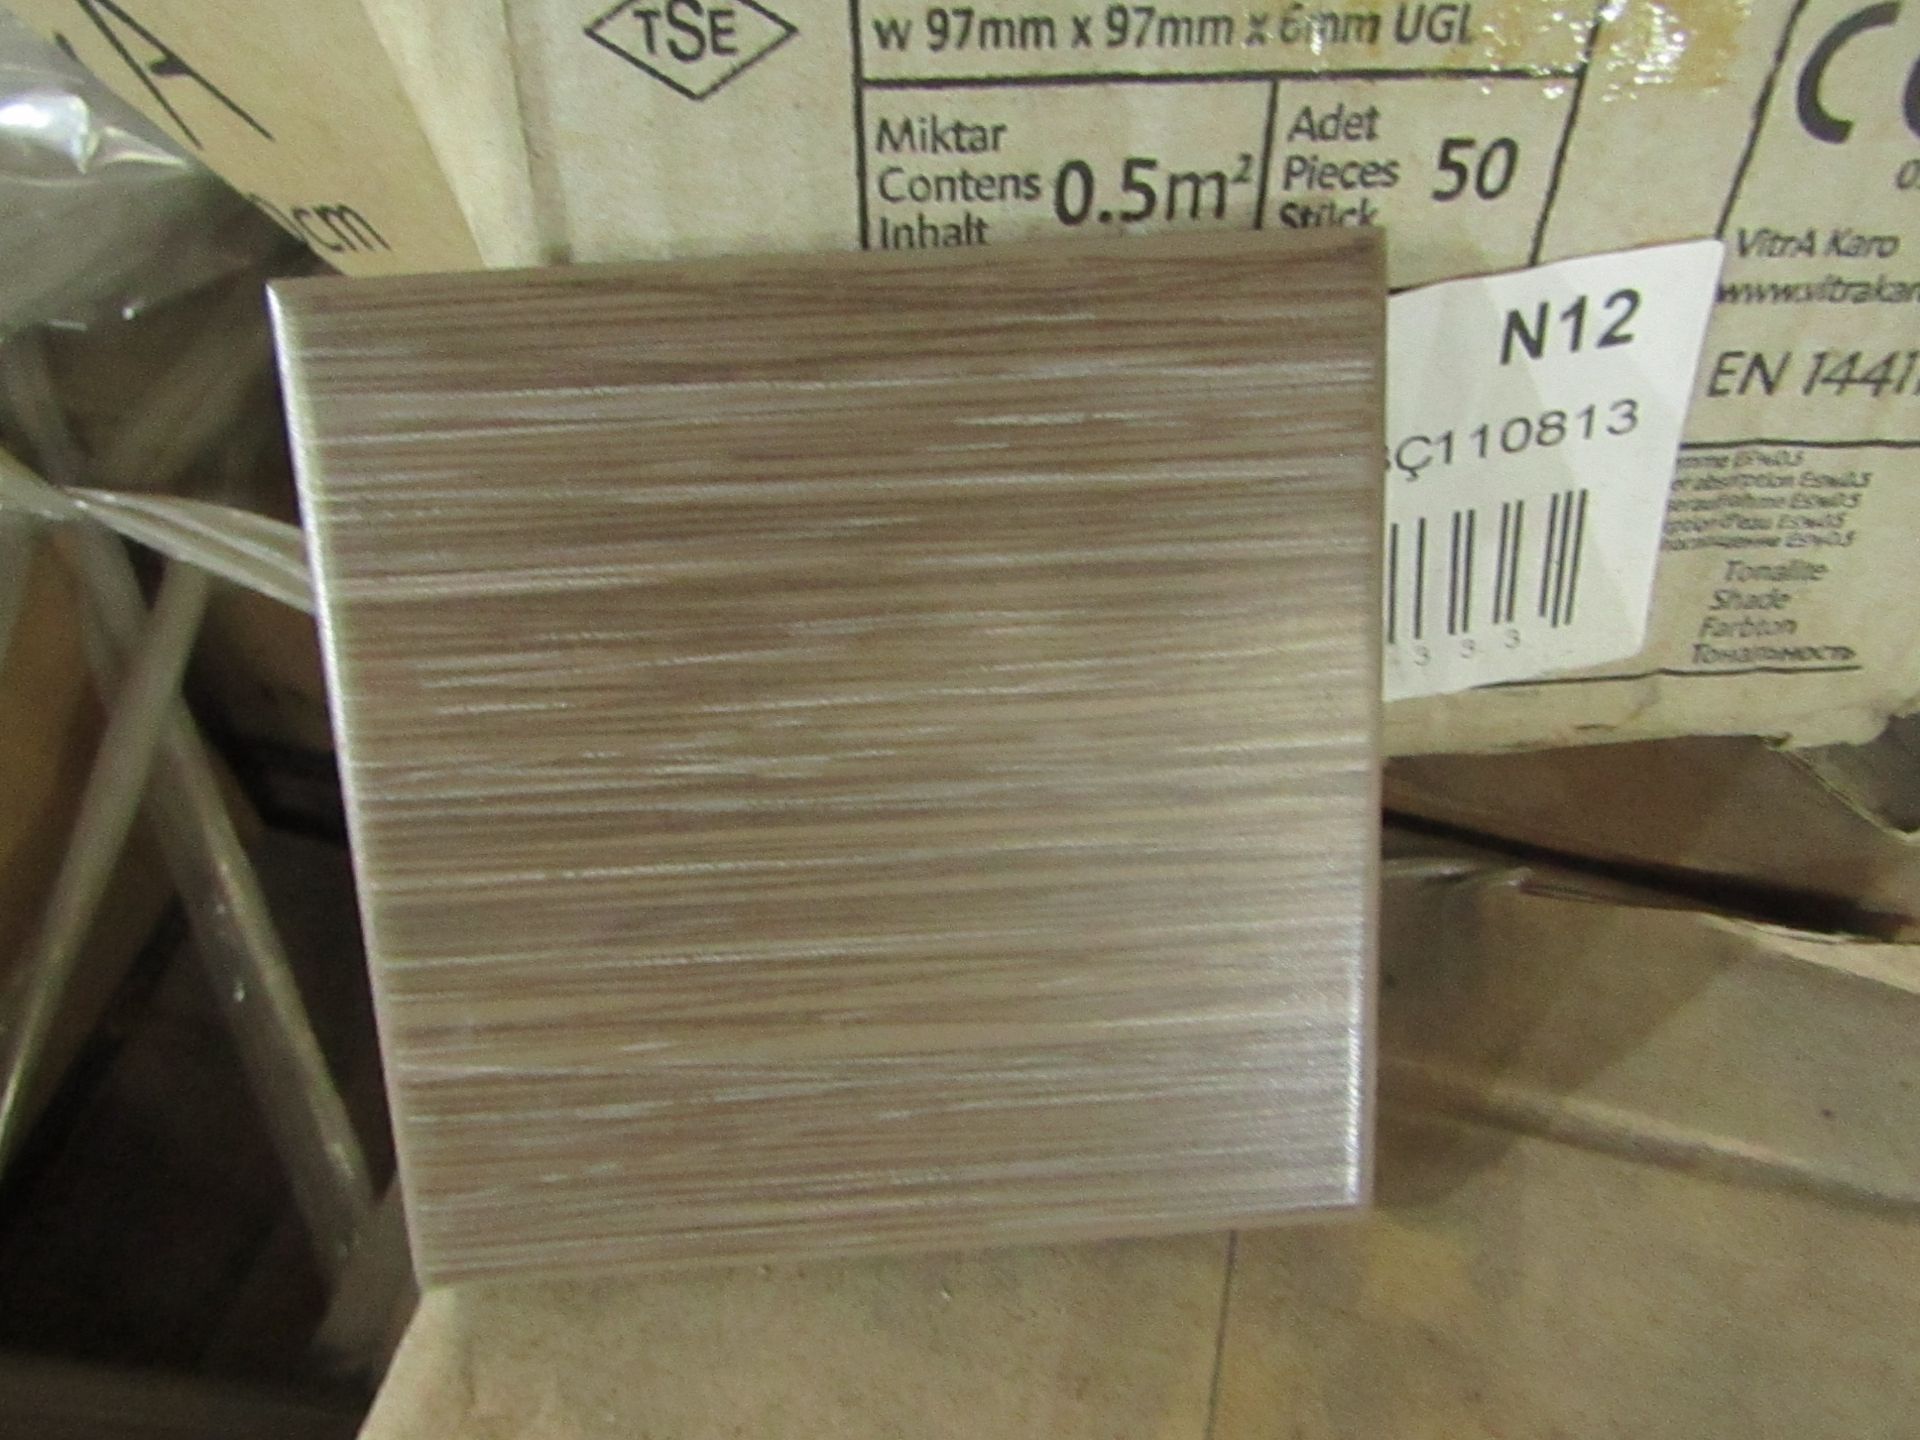 20x Boxes of 50 Vitra Elegant Mocha (K334411) tiles 100 x 100 x 6mm, brand new. Total RRP £22 a Box,